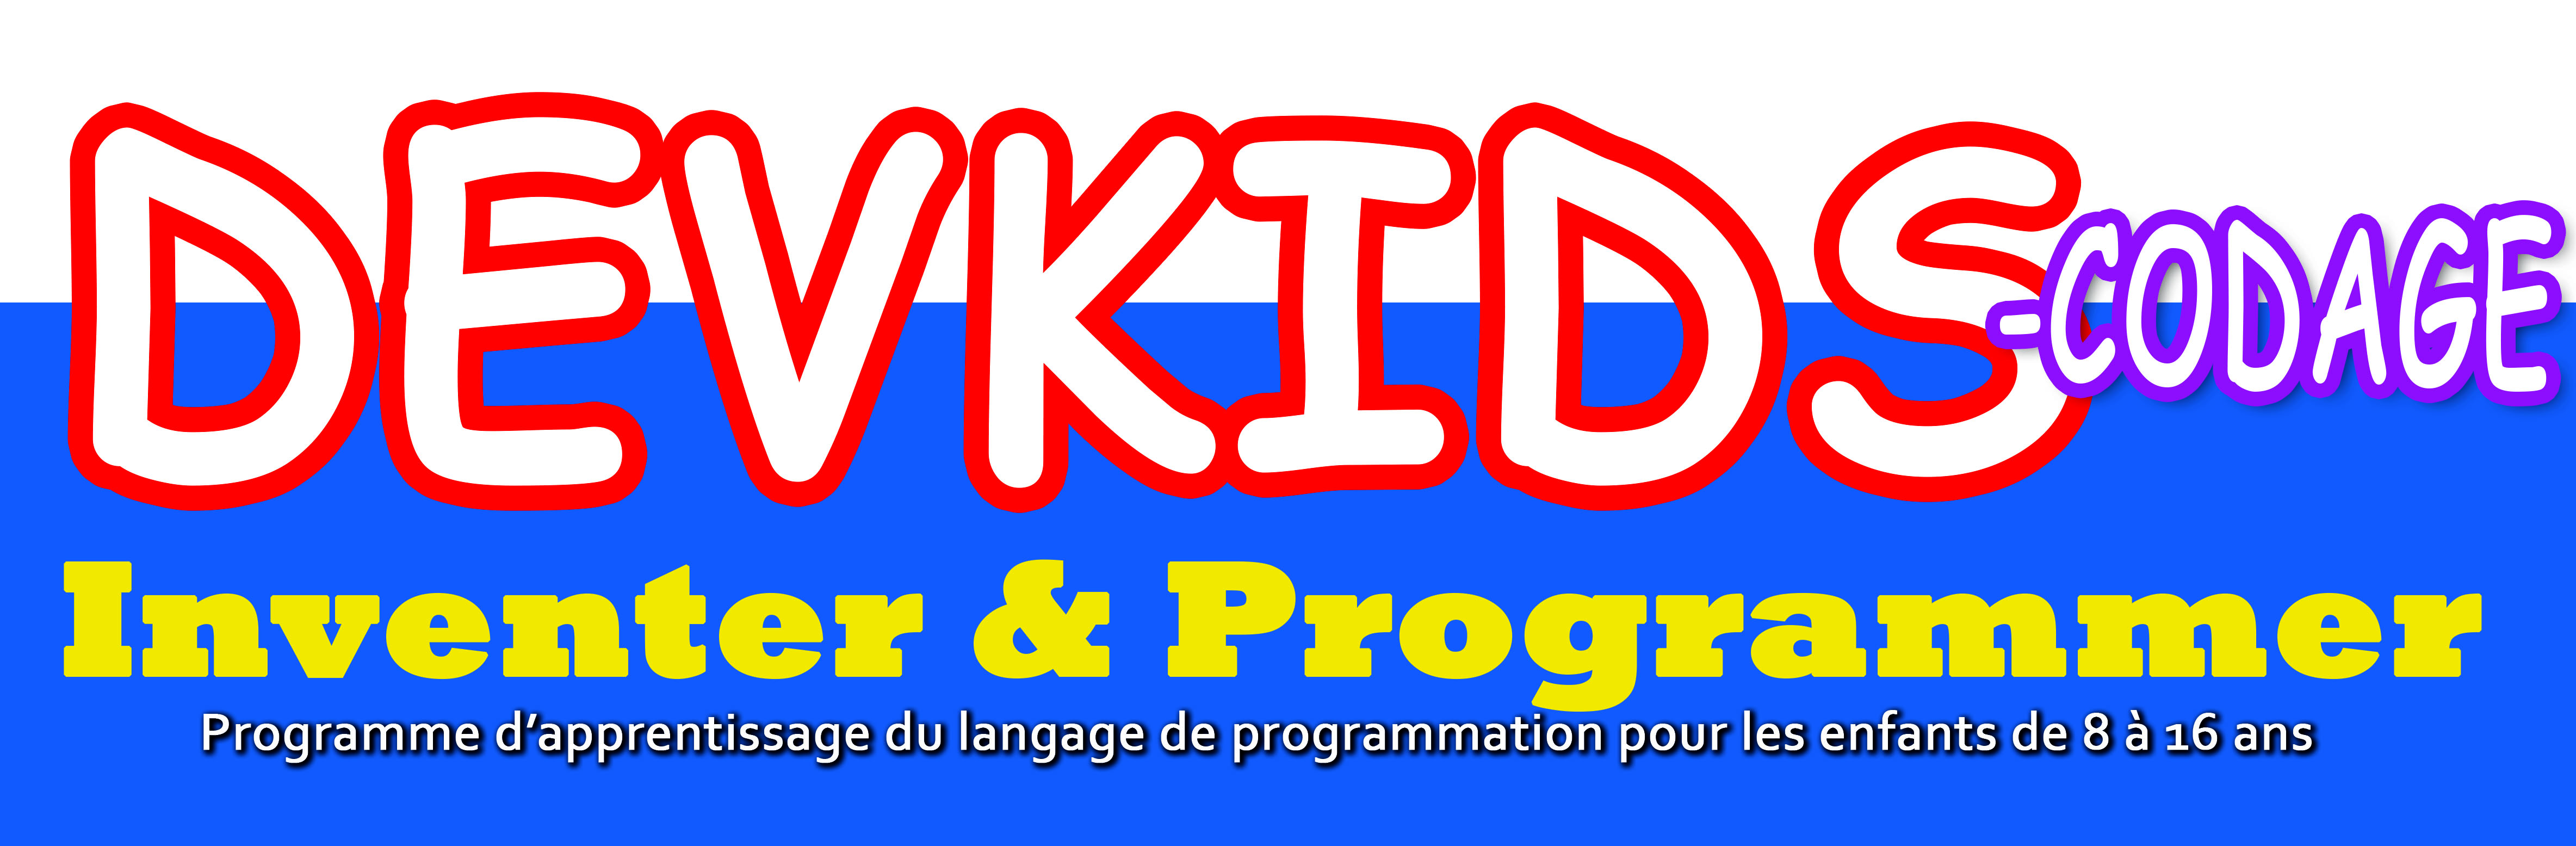 logo devkid-codage.jpg - panel consulting